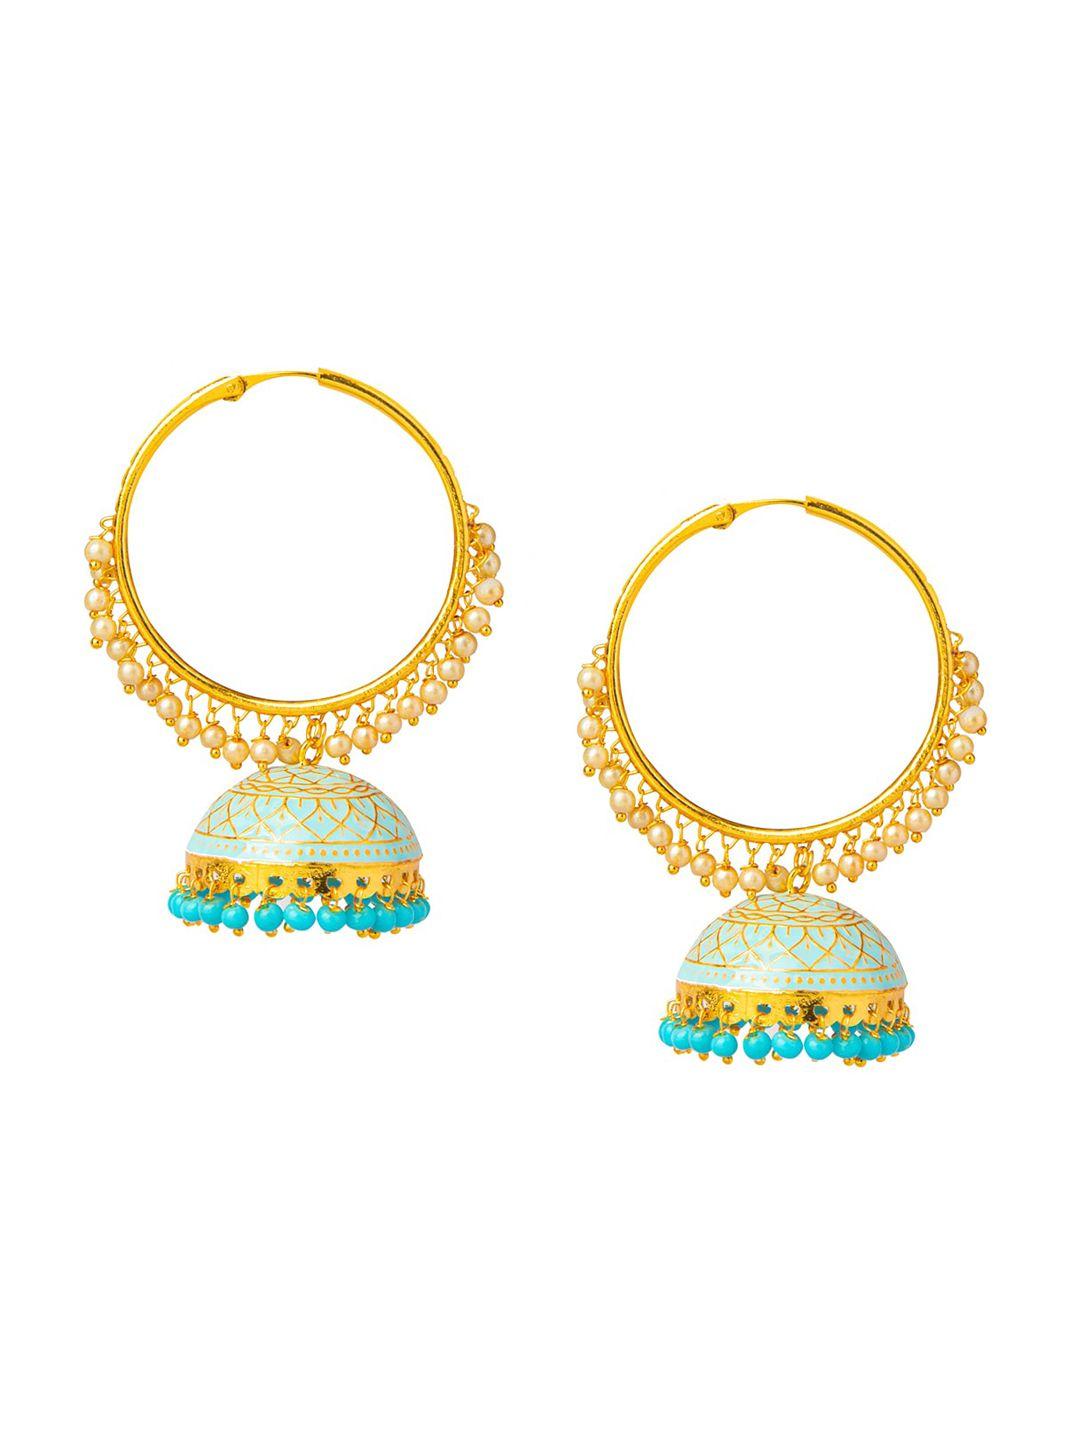 shining jewel - by shivansh gold-toned & blue contemporary hoop earrings